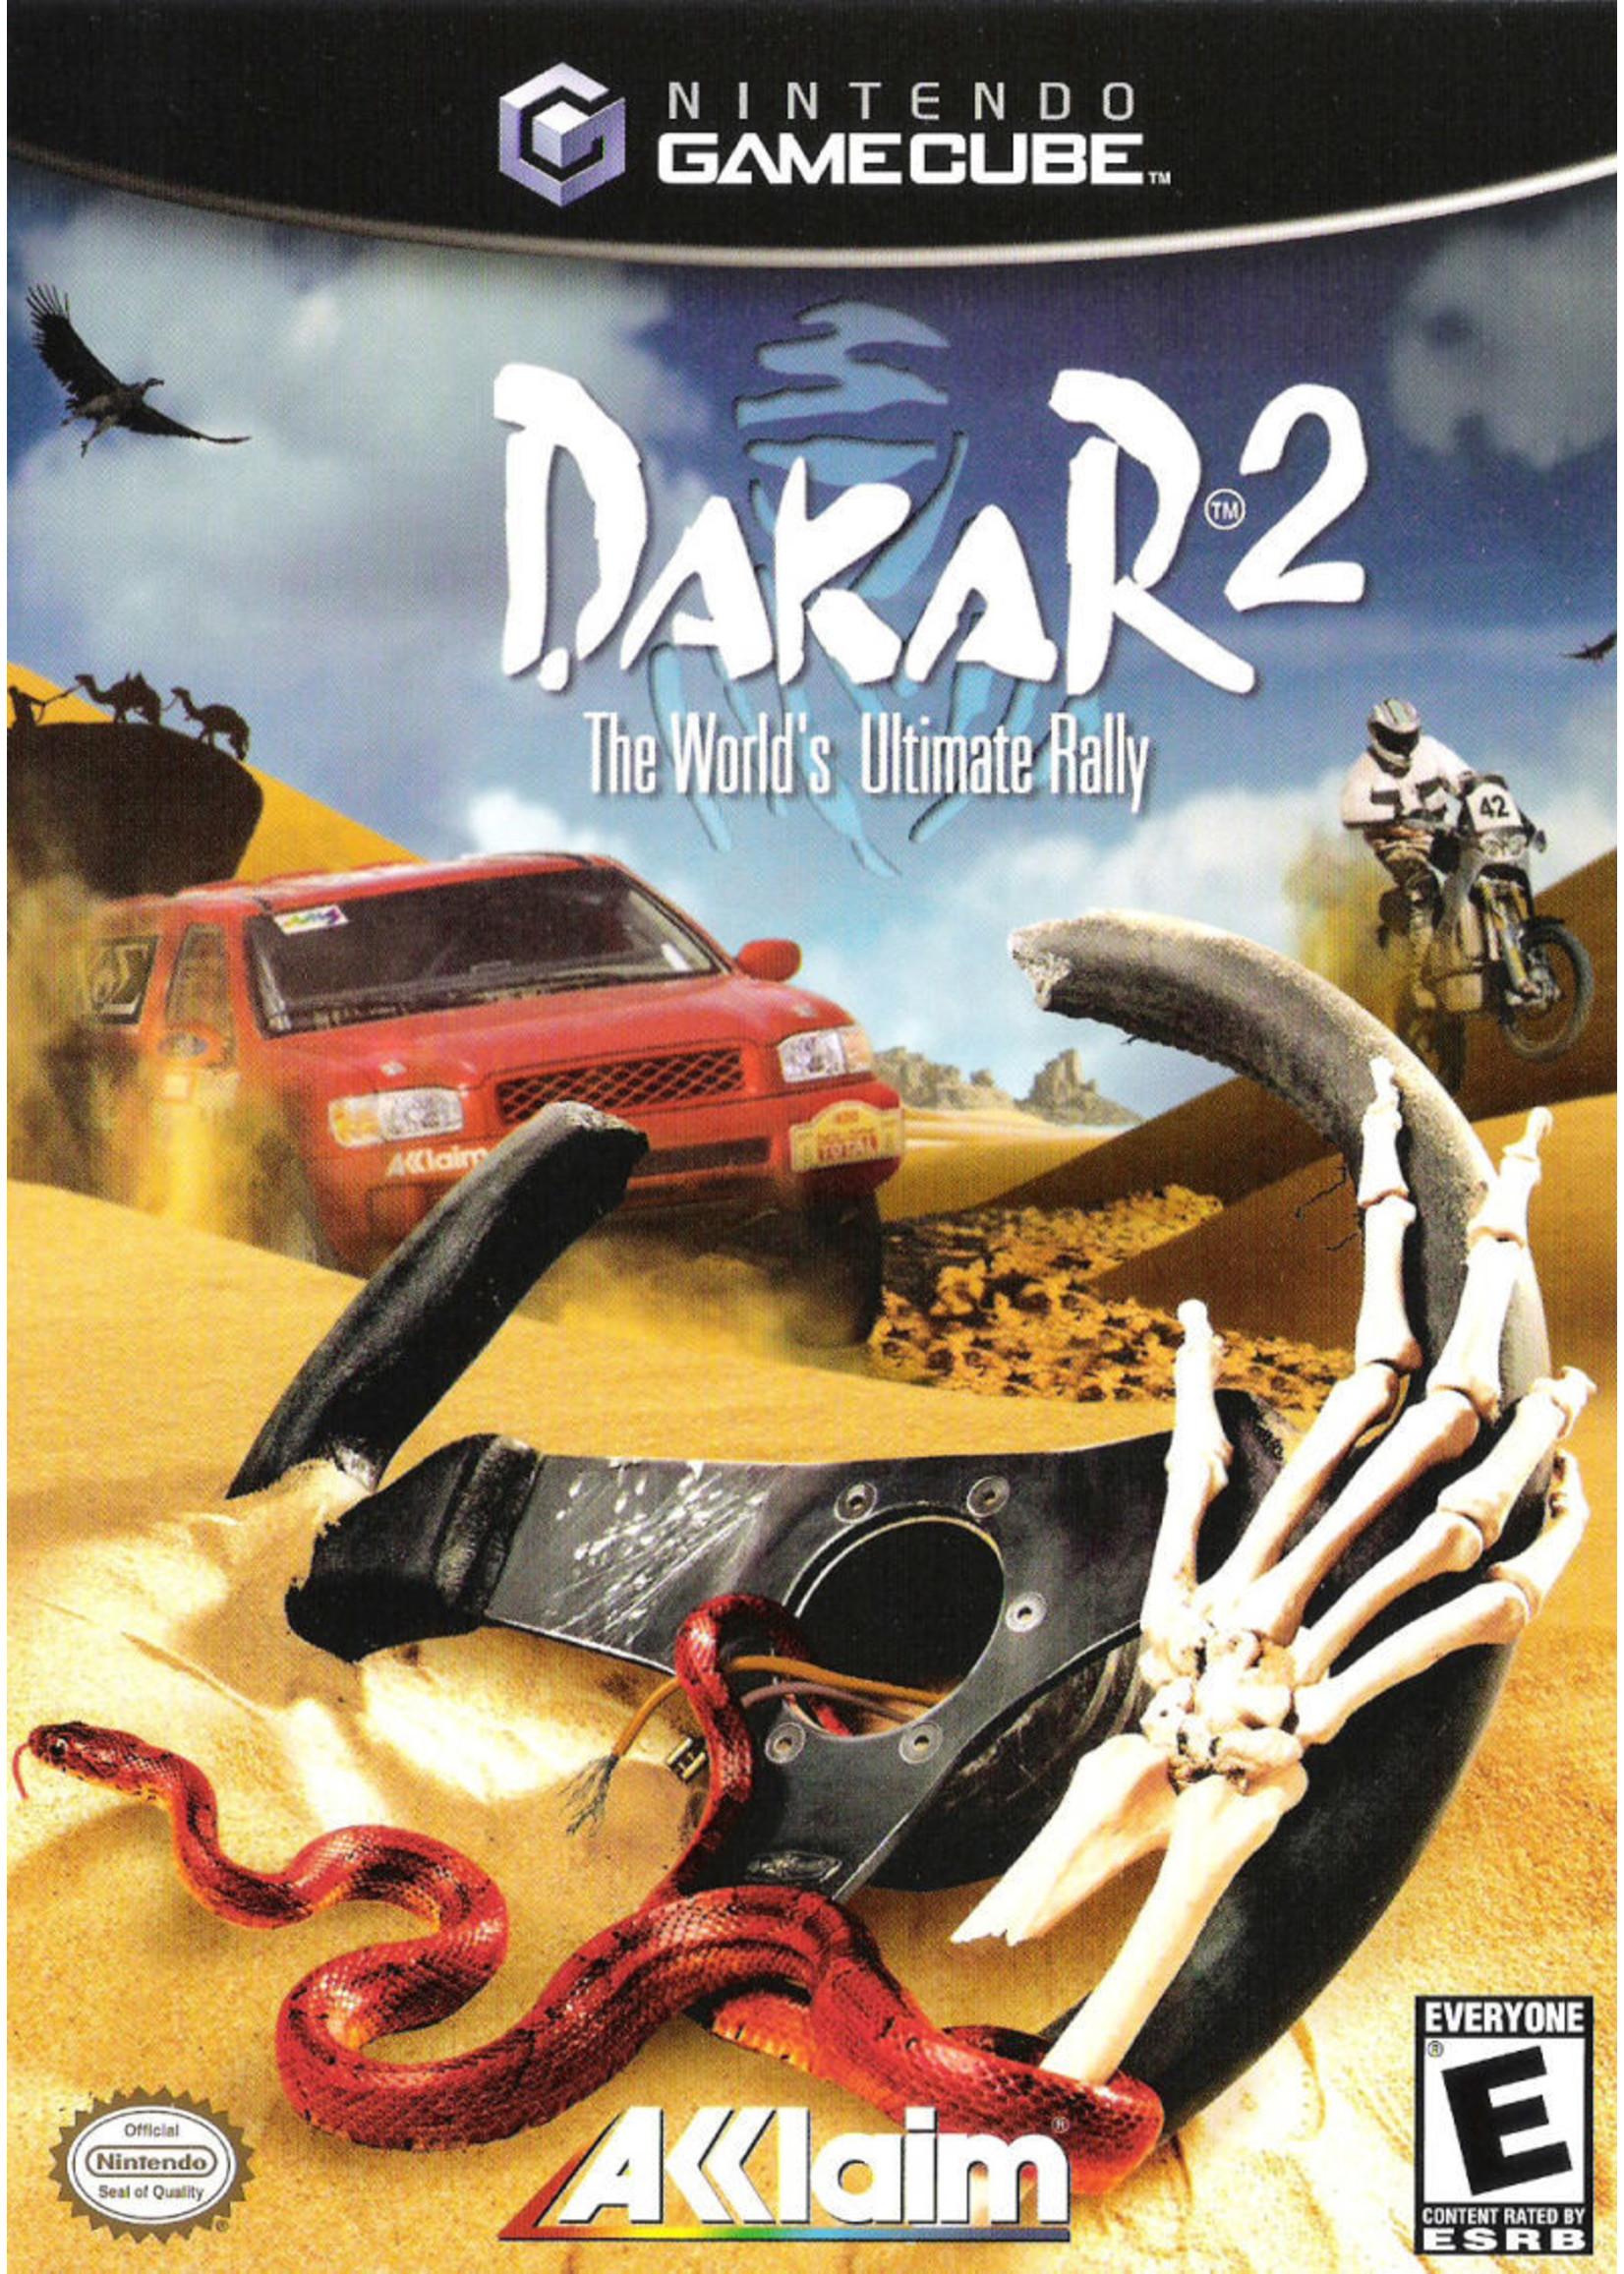 Nintendo Gamecube Dakar 2 Rally